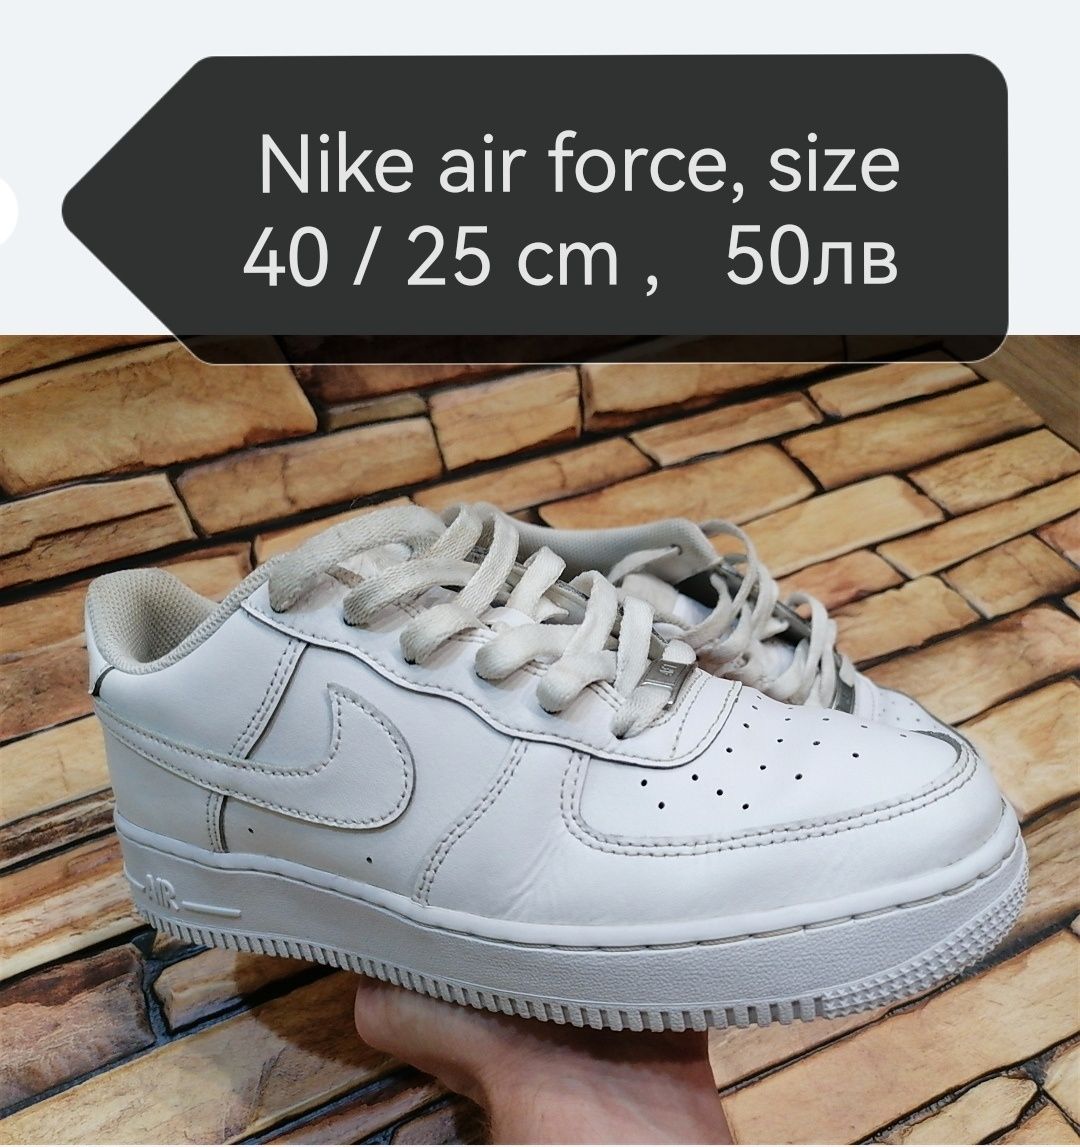 Nike air force, Jordan,yeezy, Adidas, new balance, polo